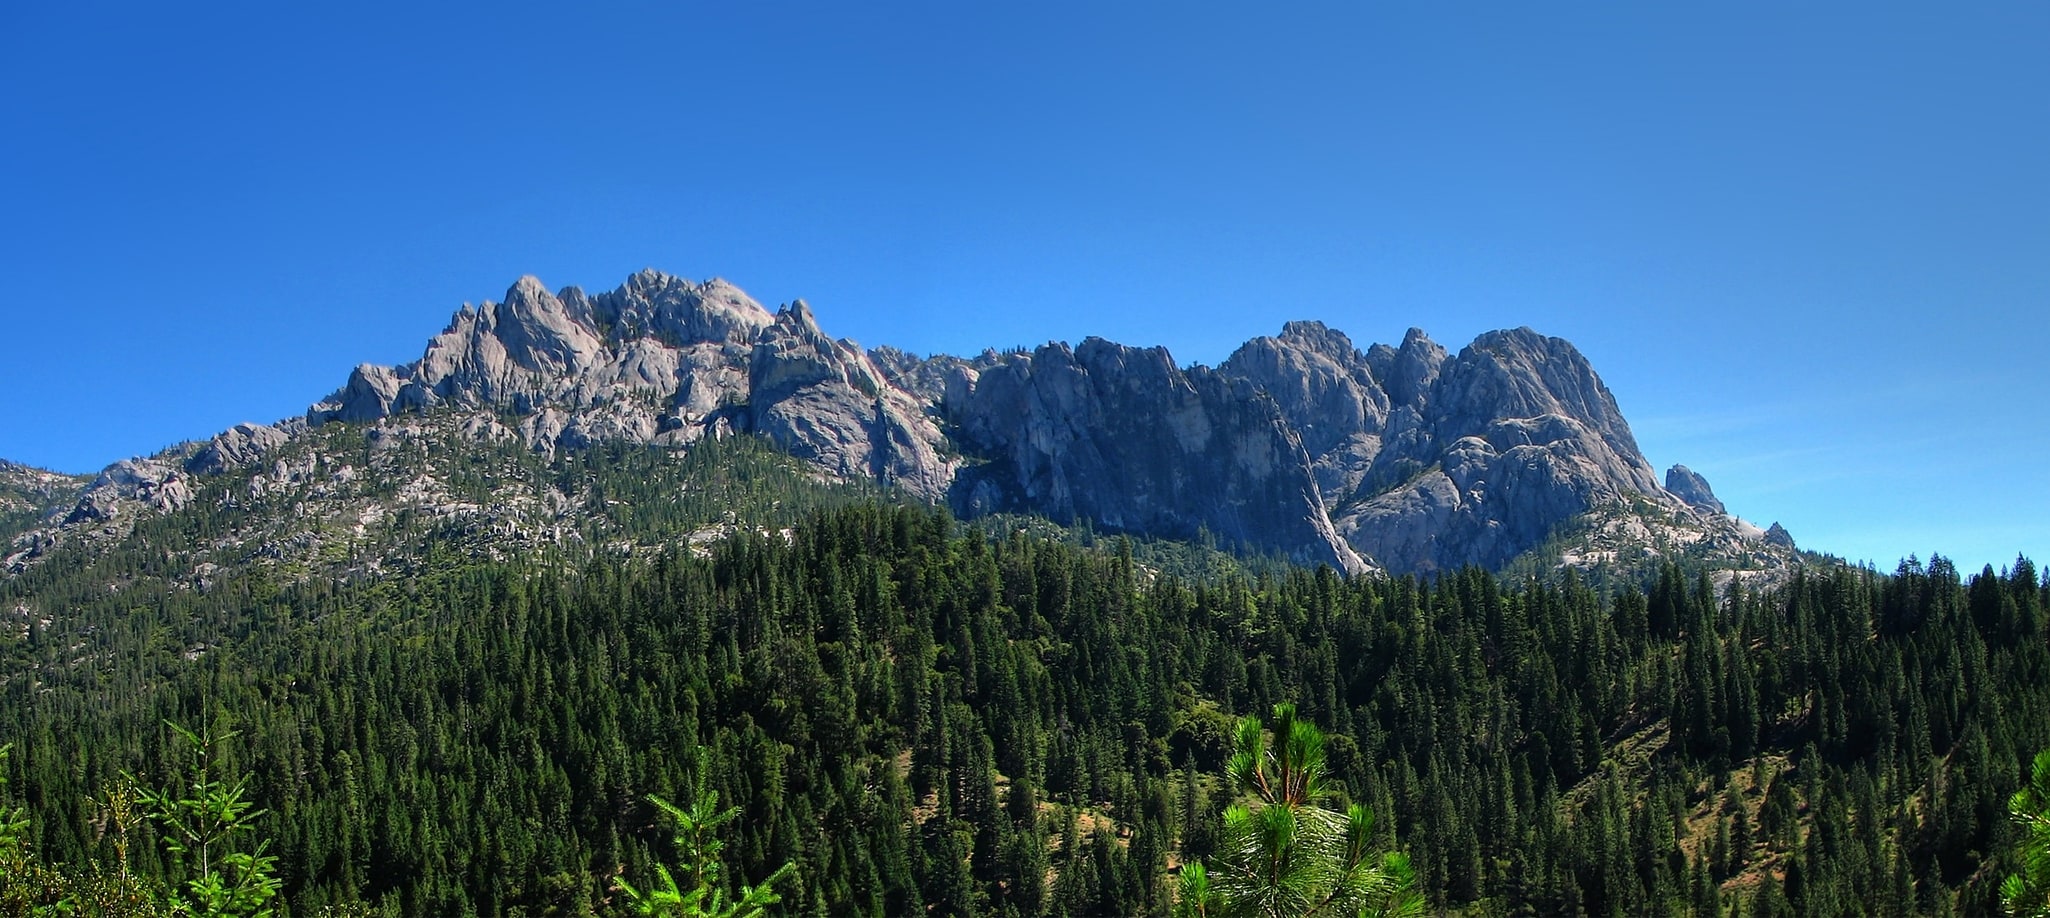 Castle Crags Wilderness, Vereinigte Staaten